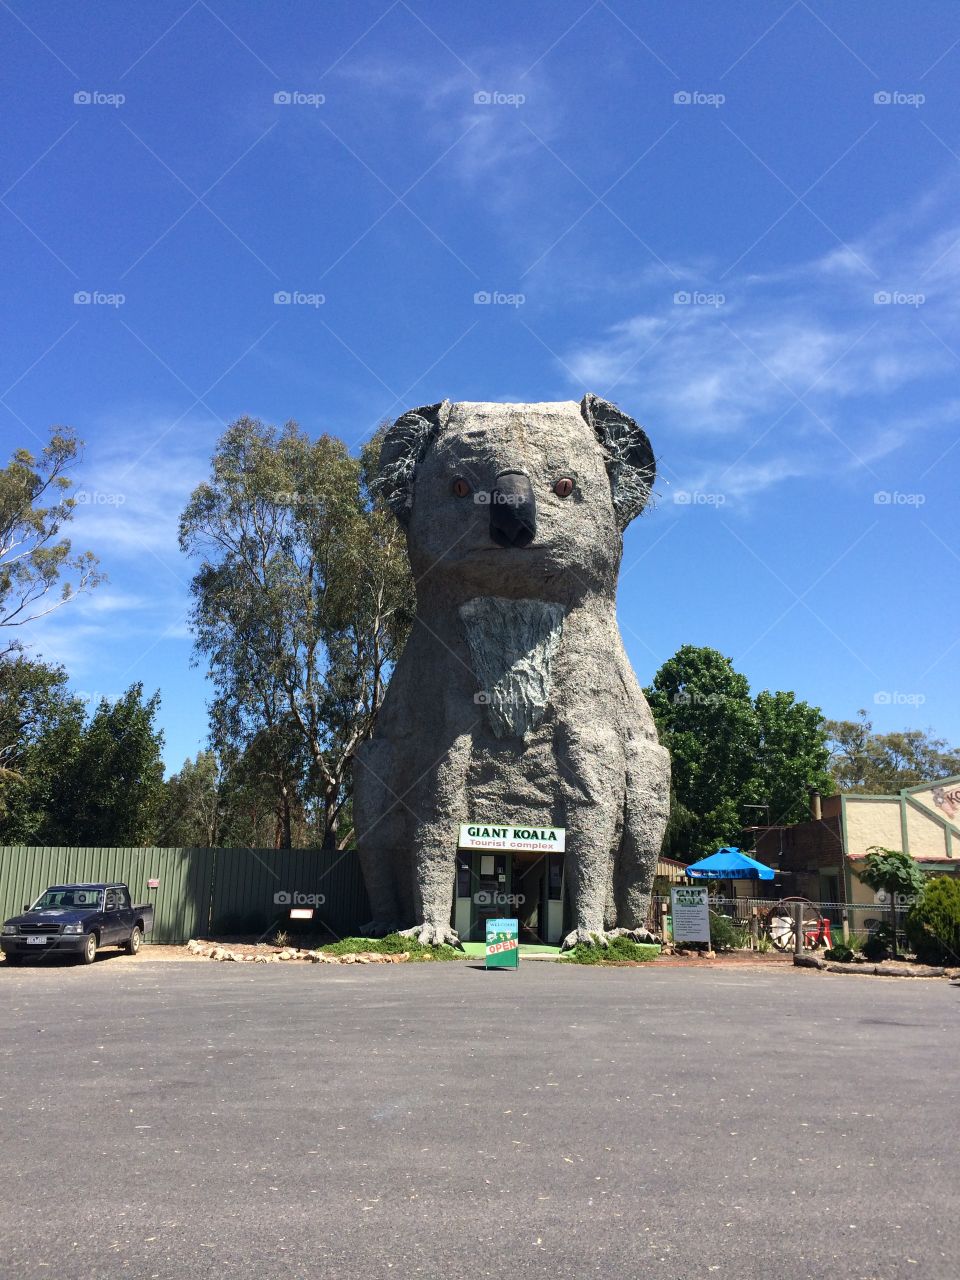 The giant Koala